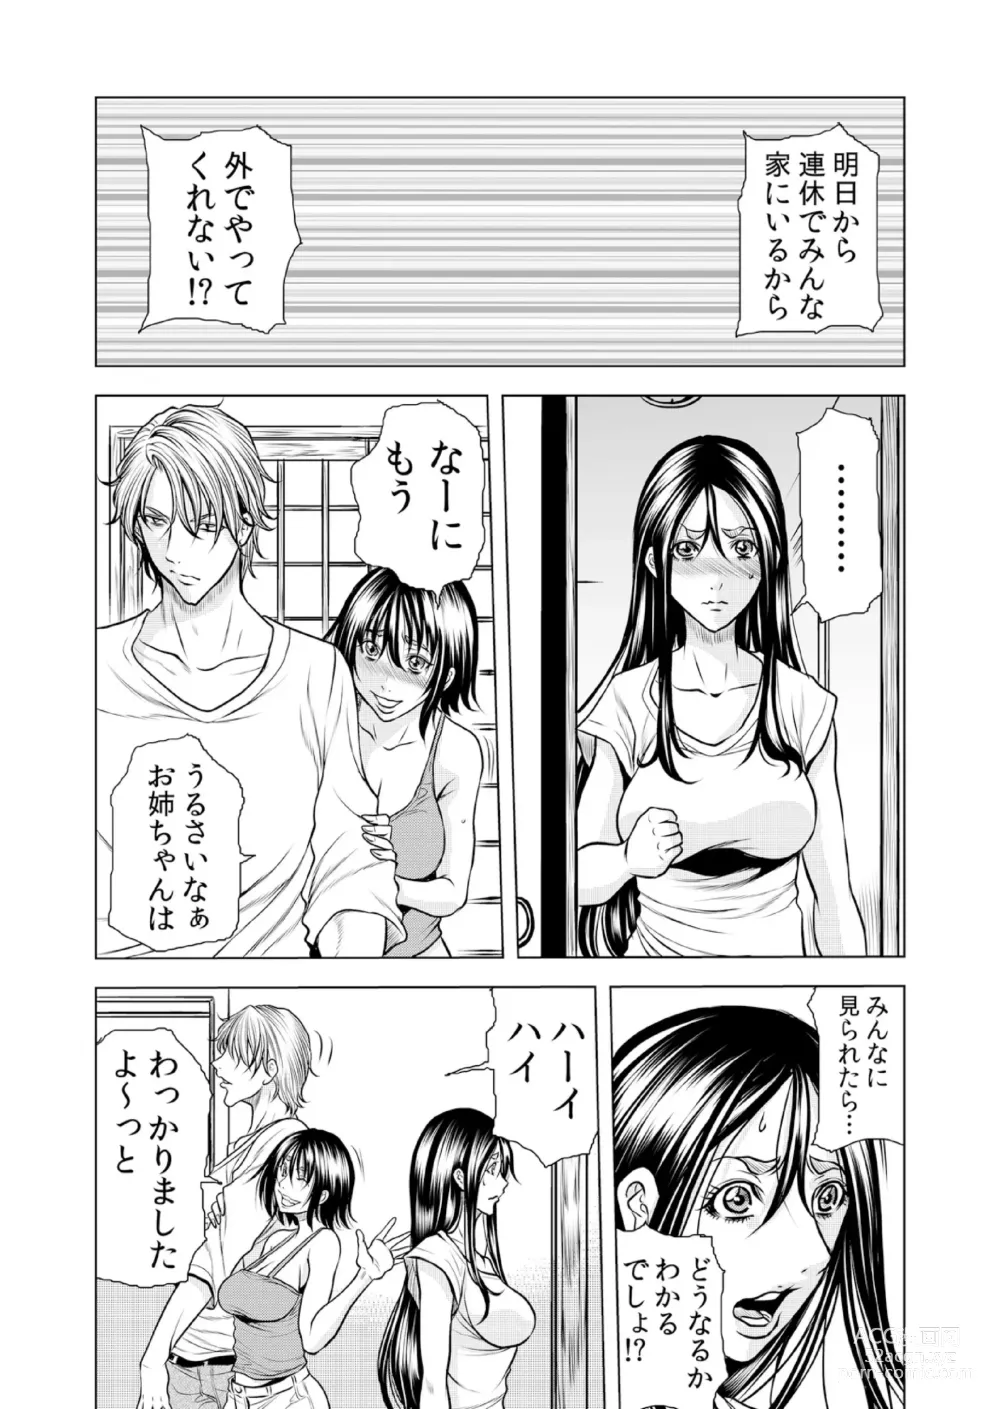 Page 2 of manga Mamasan,yobai ha OK desuka? VOL11